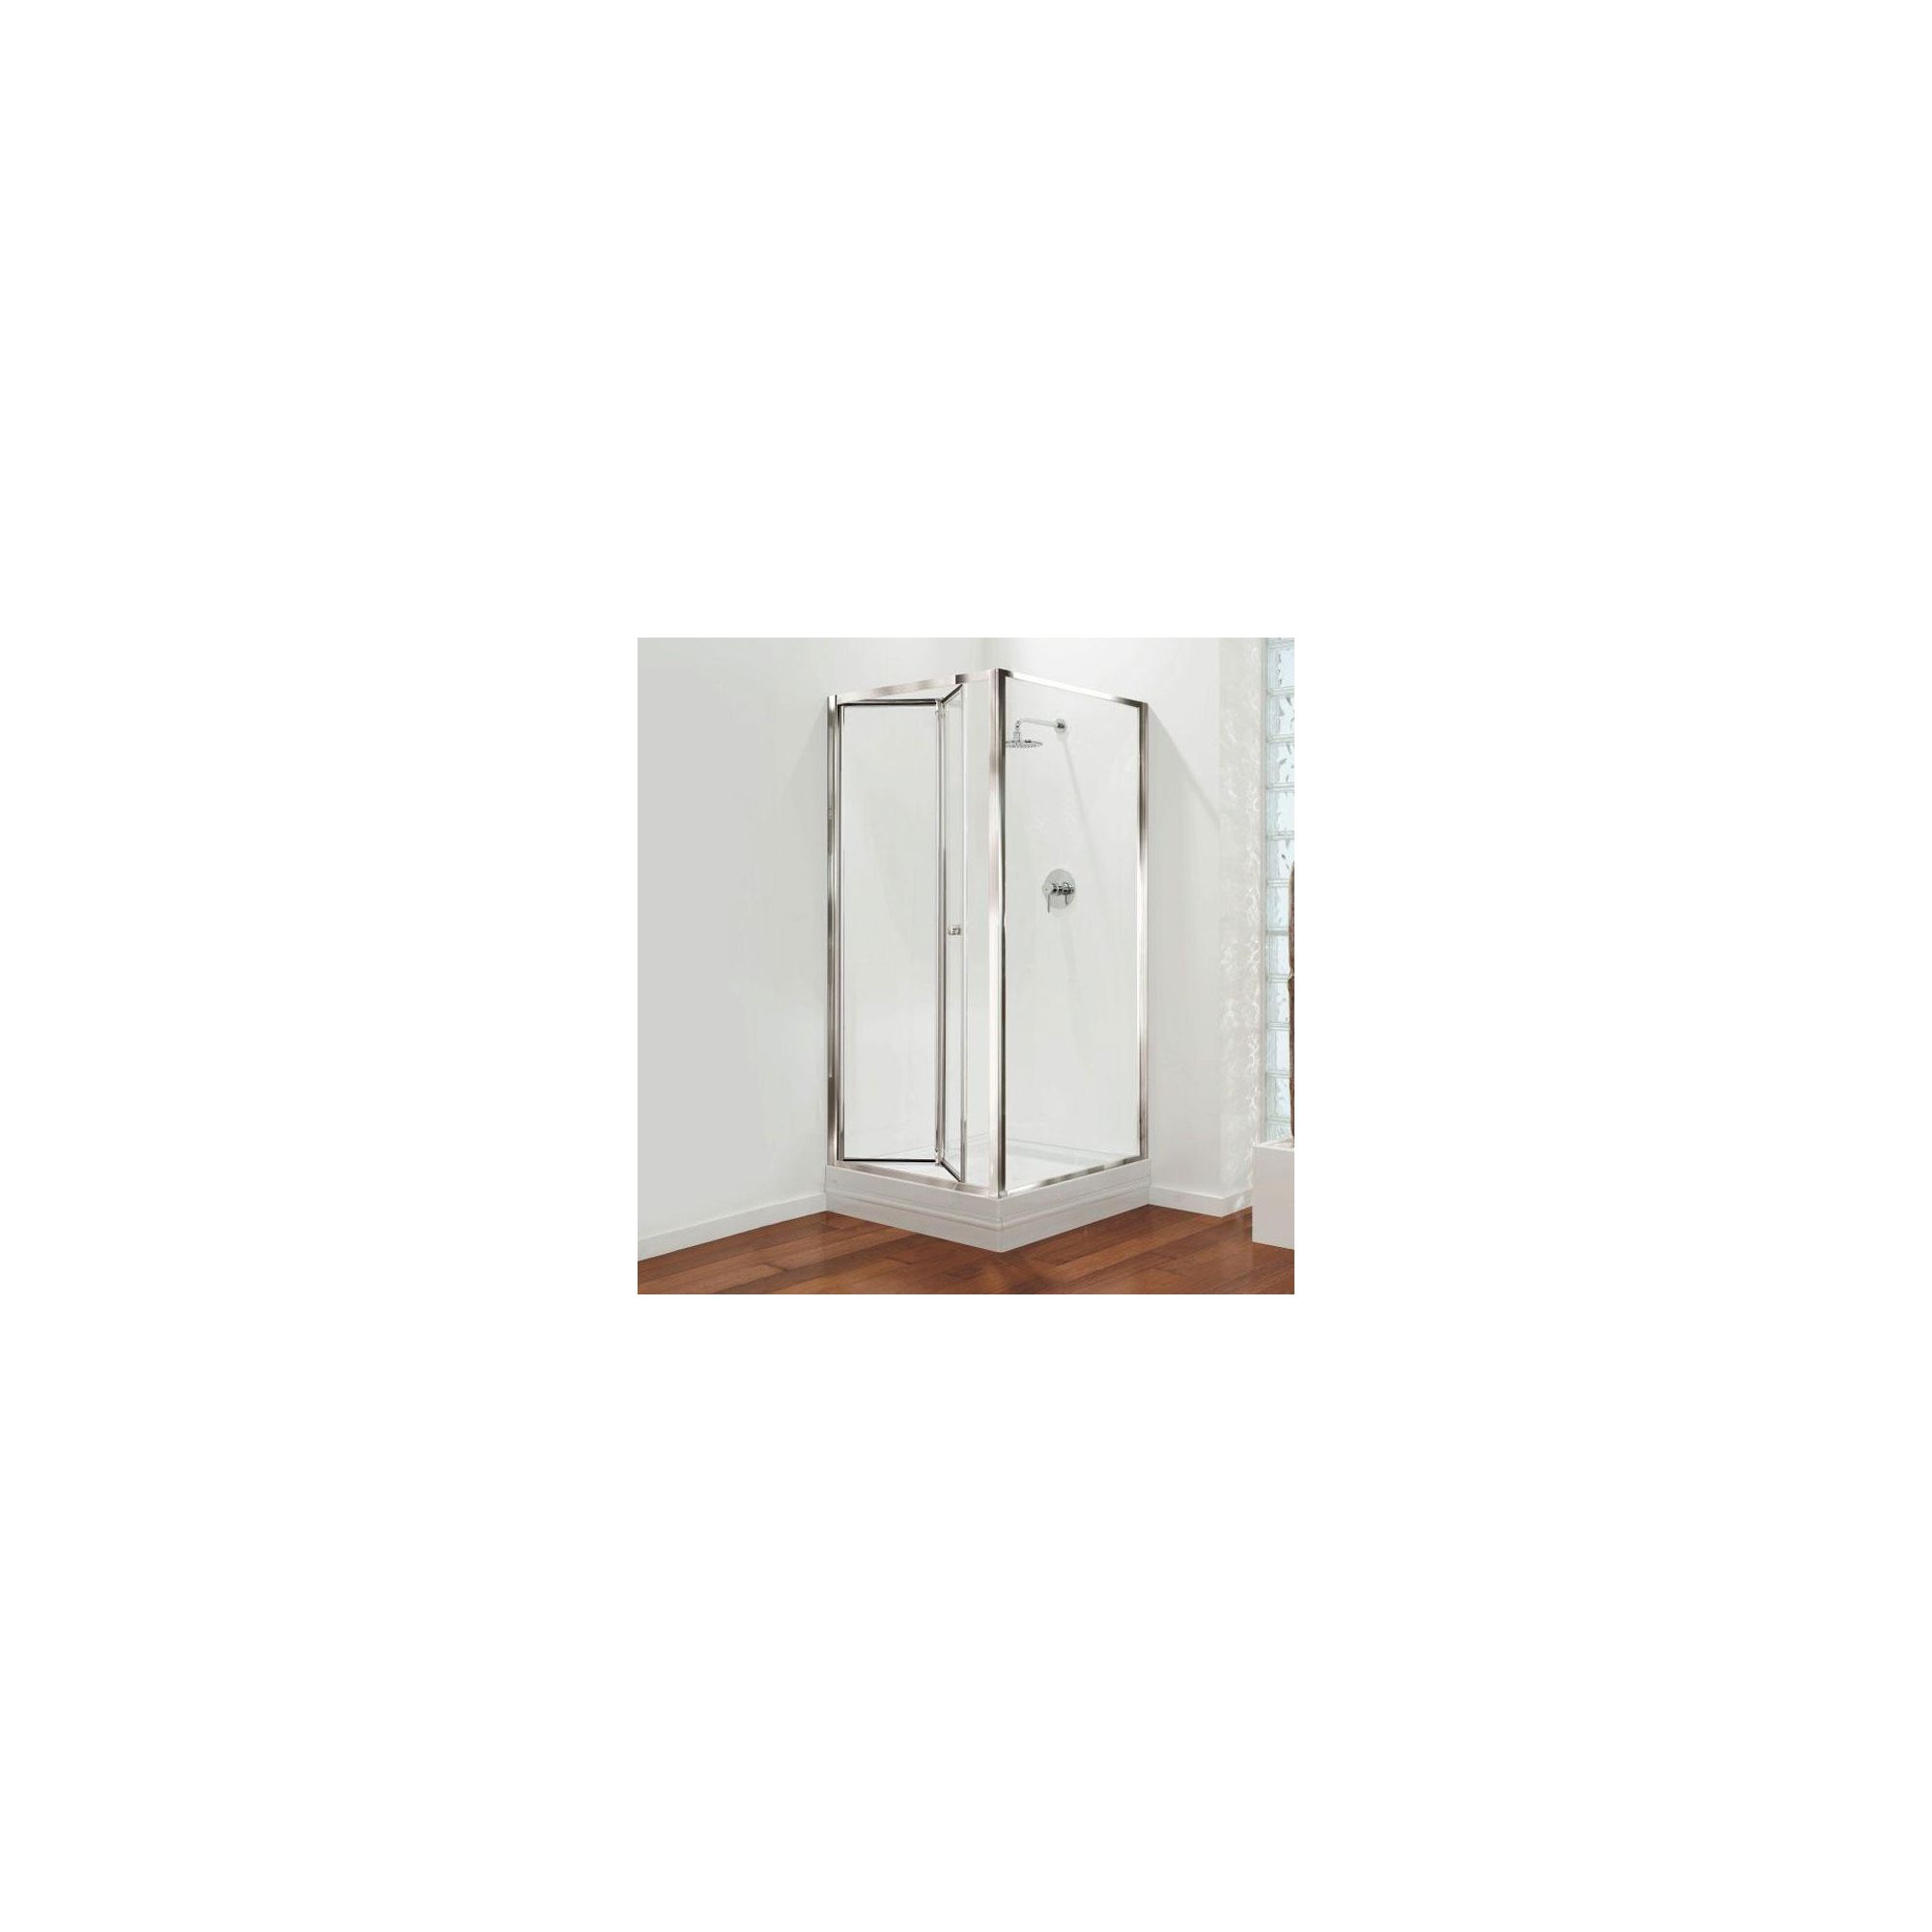 Coram GB Bi-Fold Door Shower Enclosure, 900mm x 900mm, Standard Tray, 4mm Glass, Chrome Frame at Tesco Direct